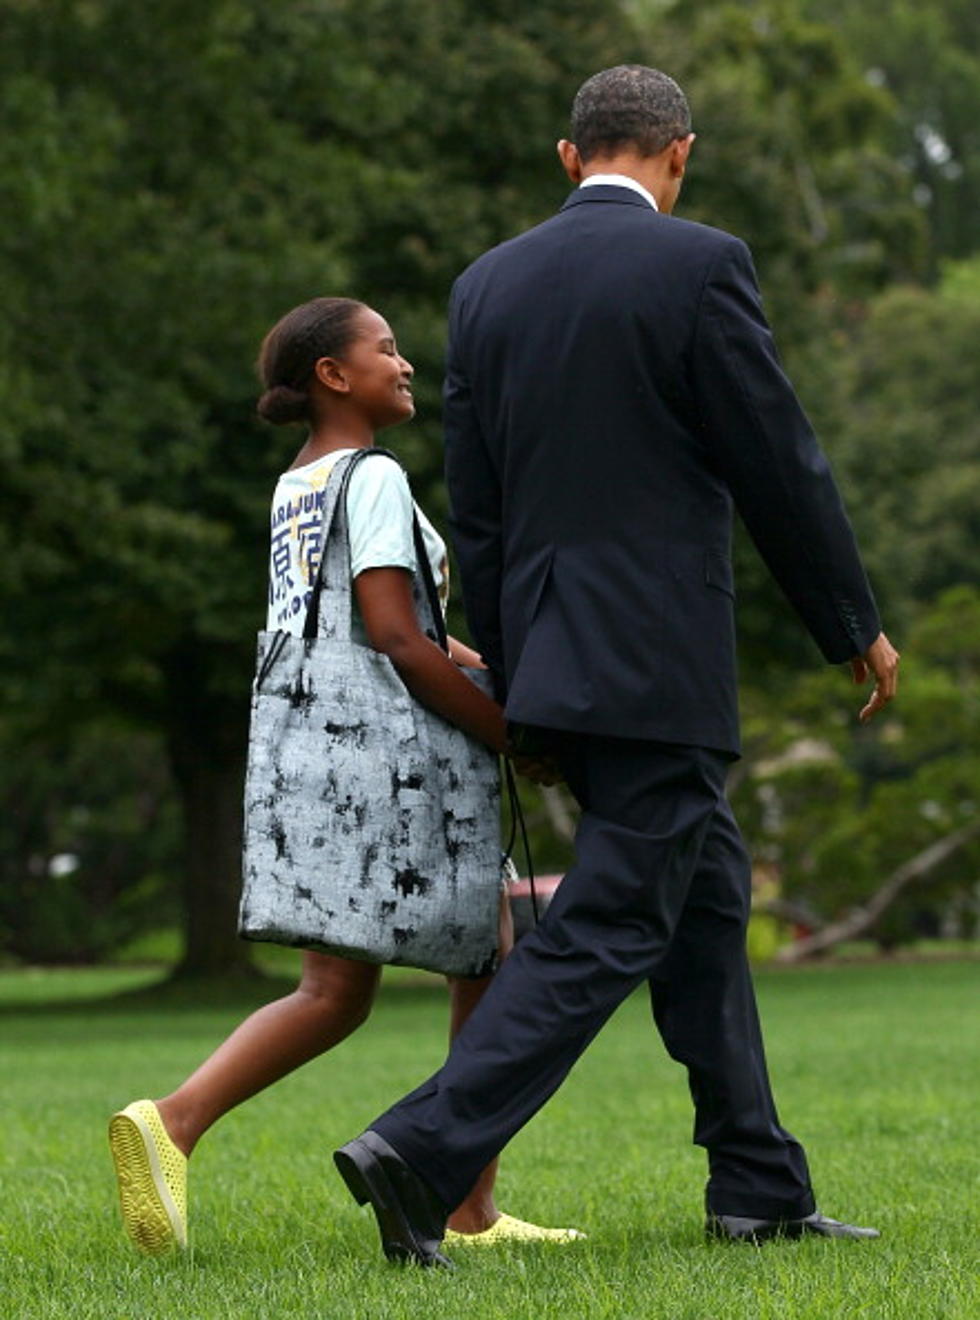 Obama Slams US Schoolchildrens’ Performance During Visit To Australia